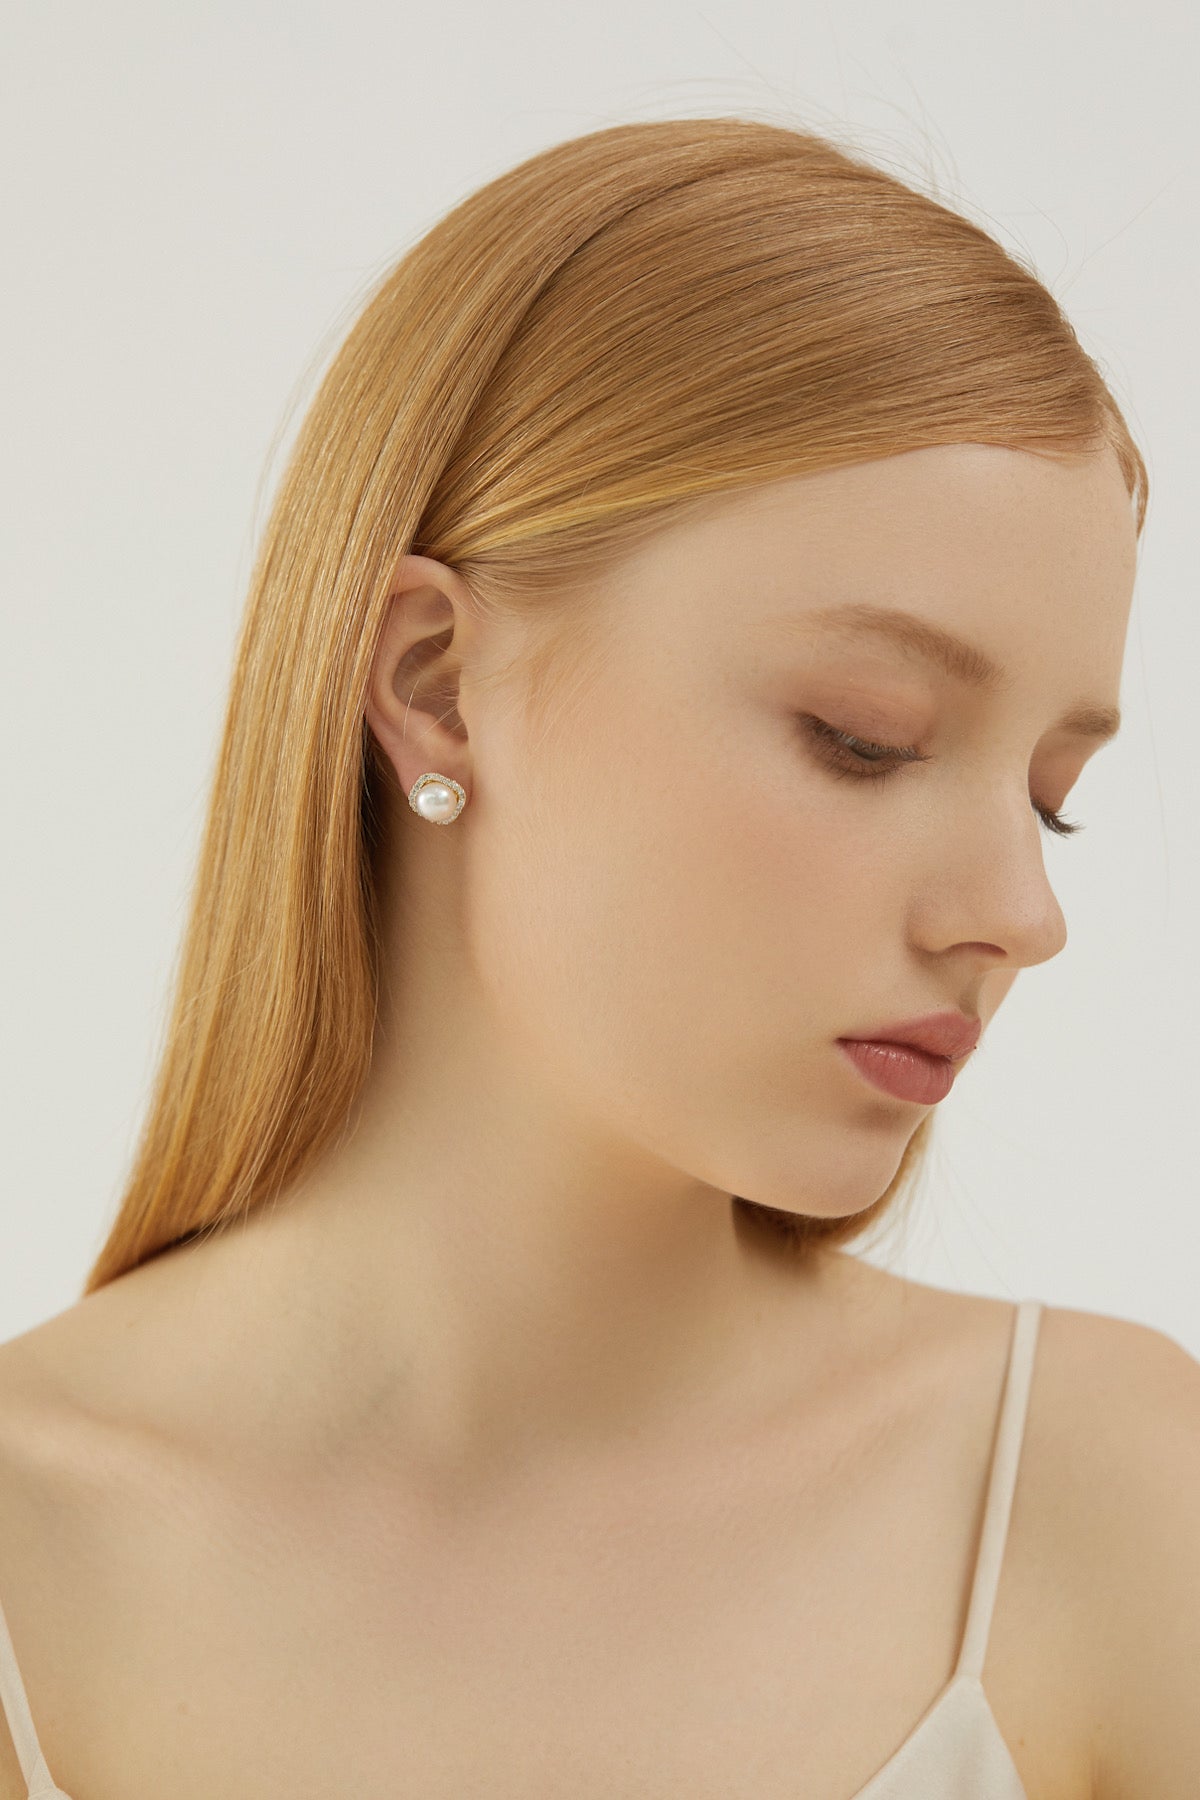 SKYE Shop Chic Modern Elegant Classy Women Jewelry French Parisian Minimalist Alexandra Freshwater Pearl Stud Earrings 7